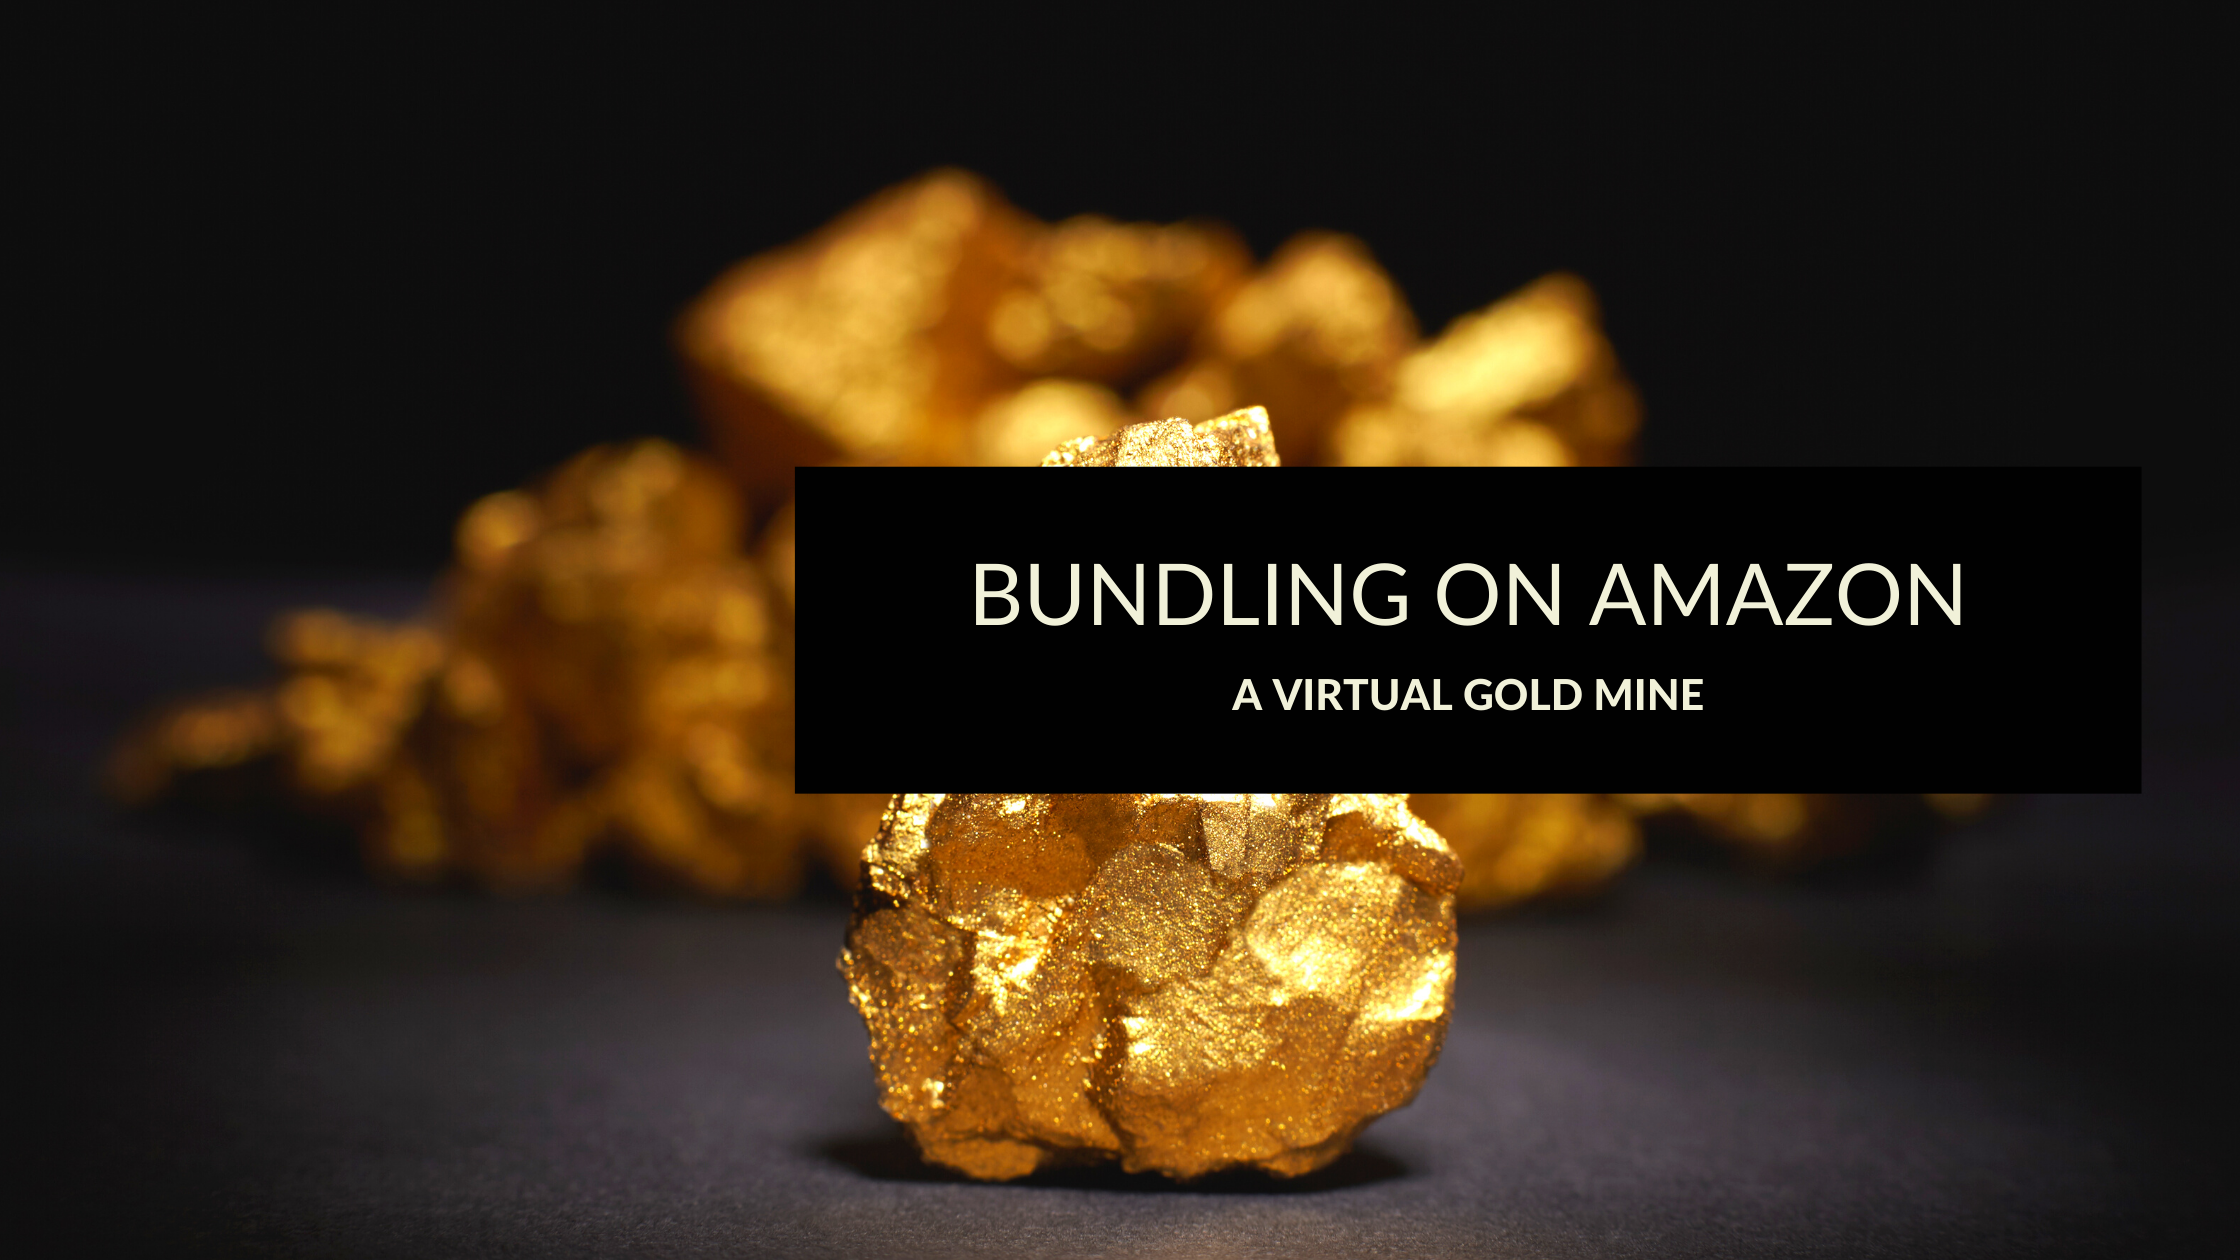 Bundling on Amazon - A virtual gold mine